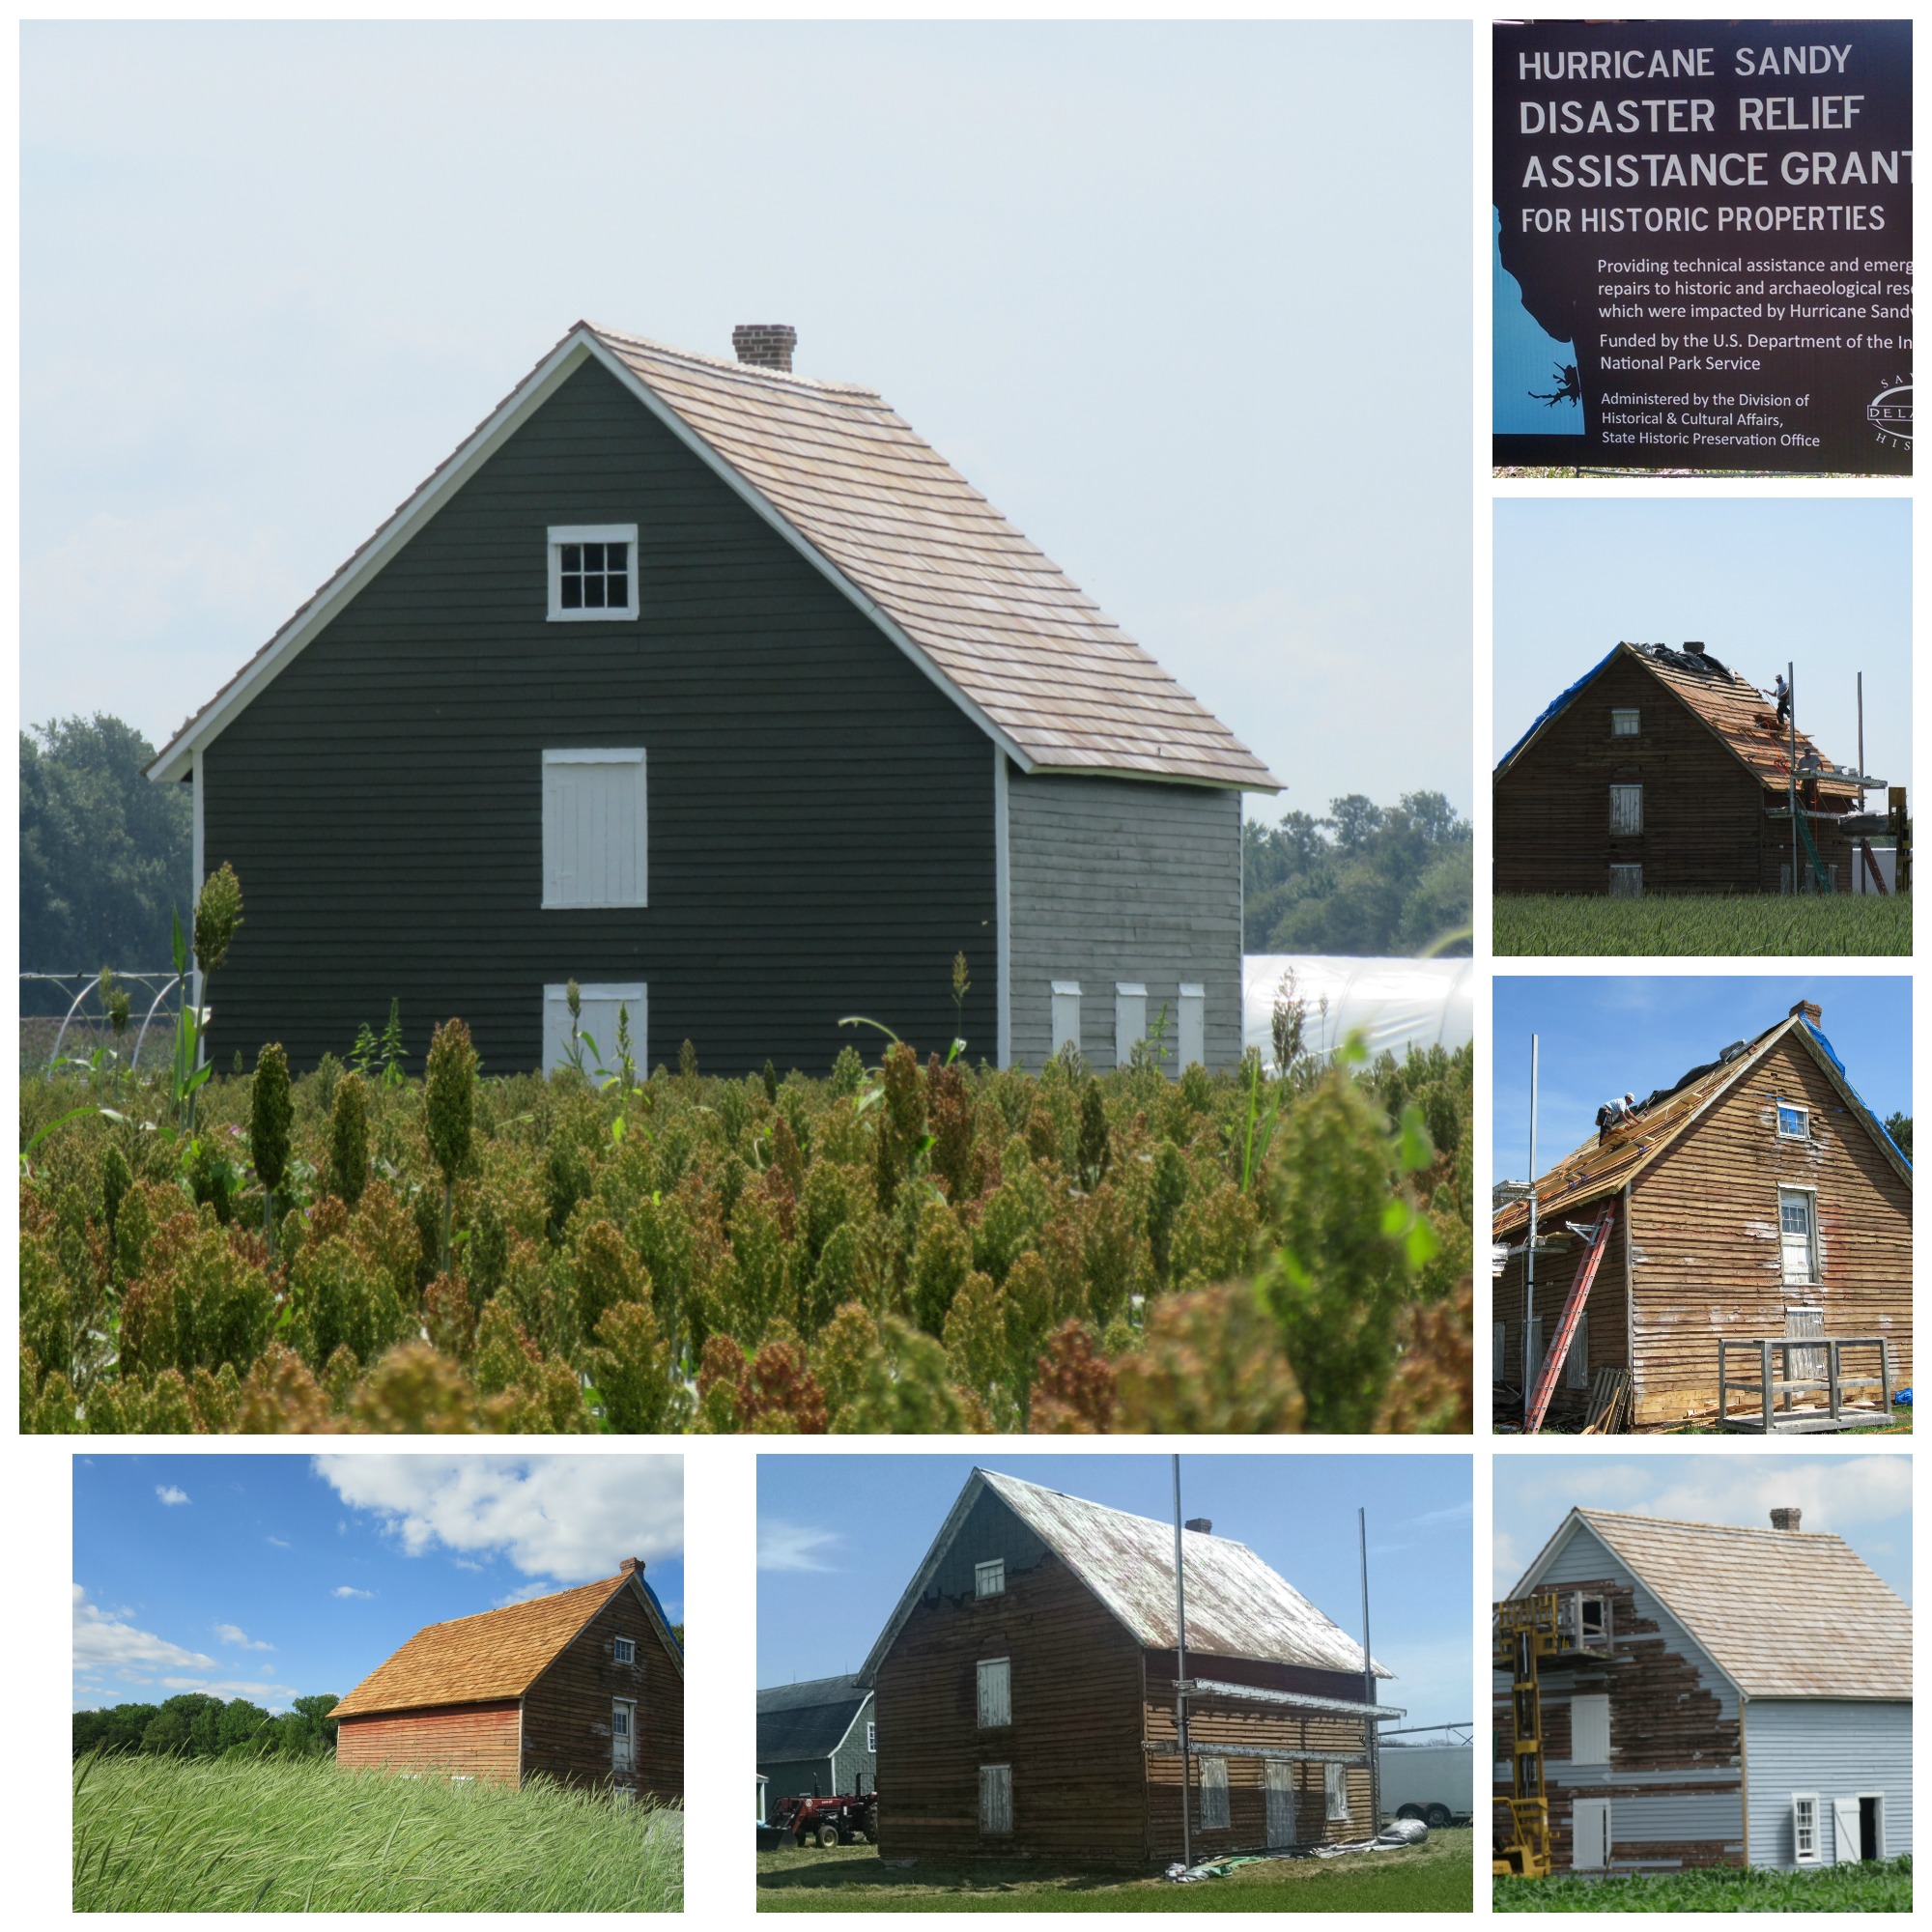 Historic Restoration of Phillip's Sweet Potato Barn in Laurel Delaware